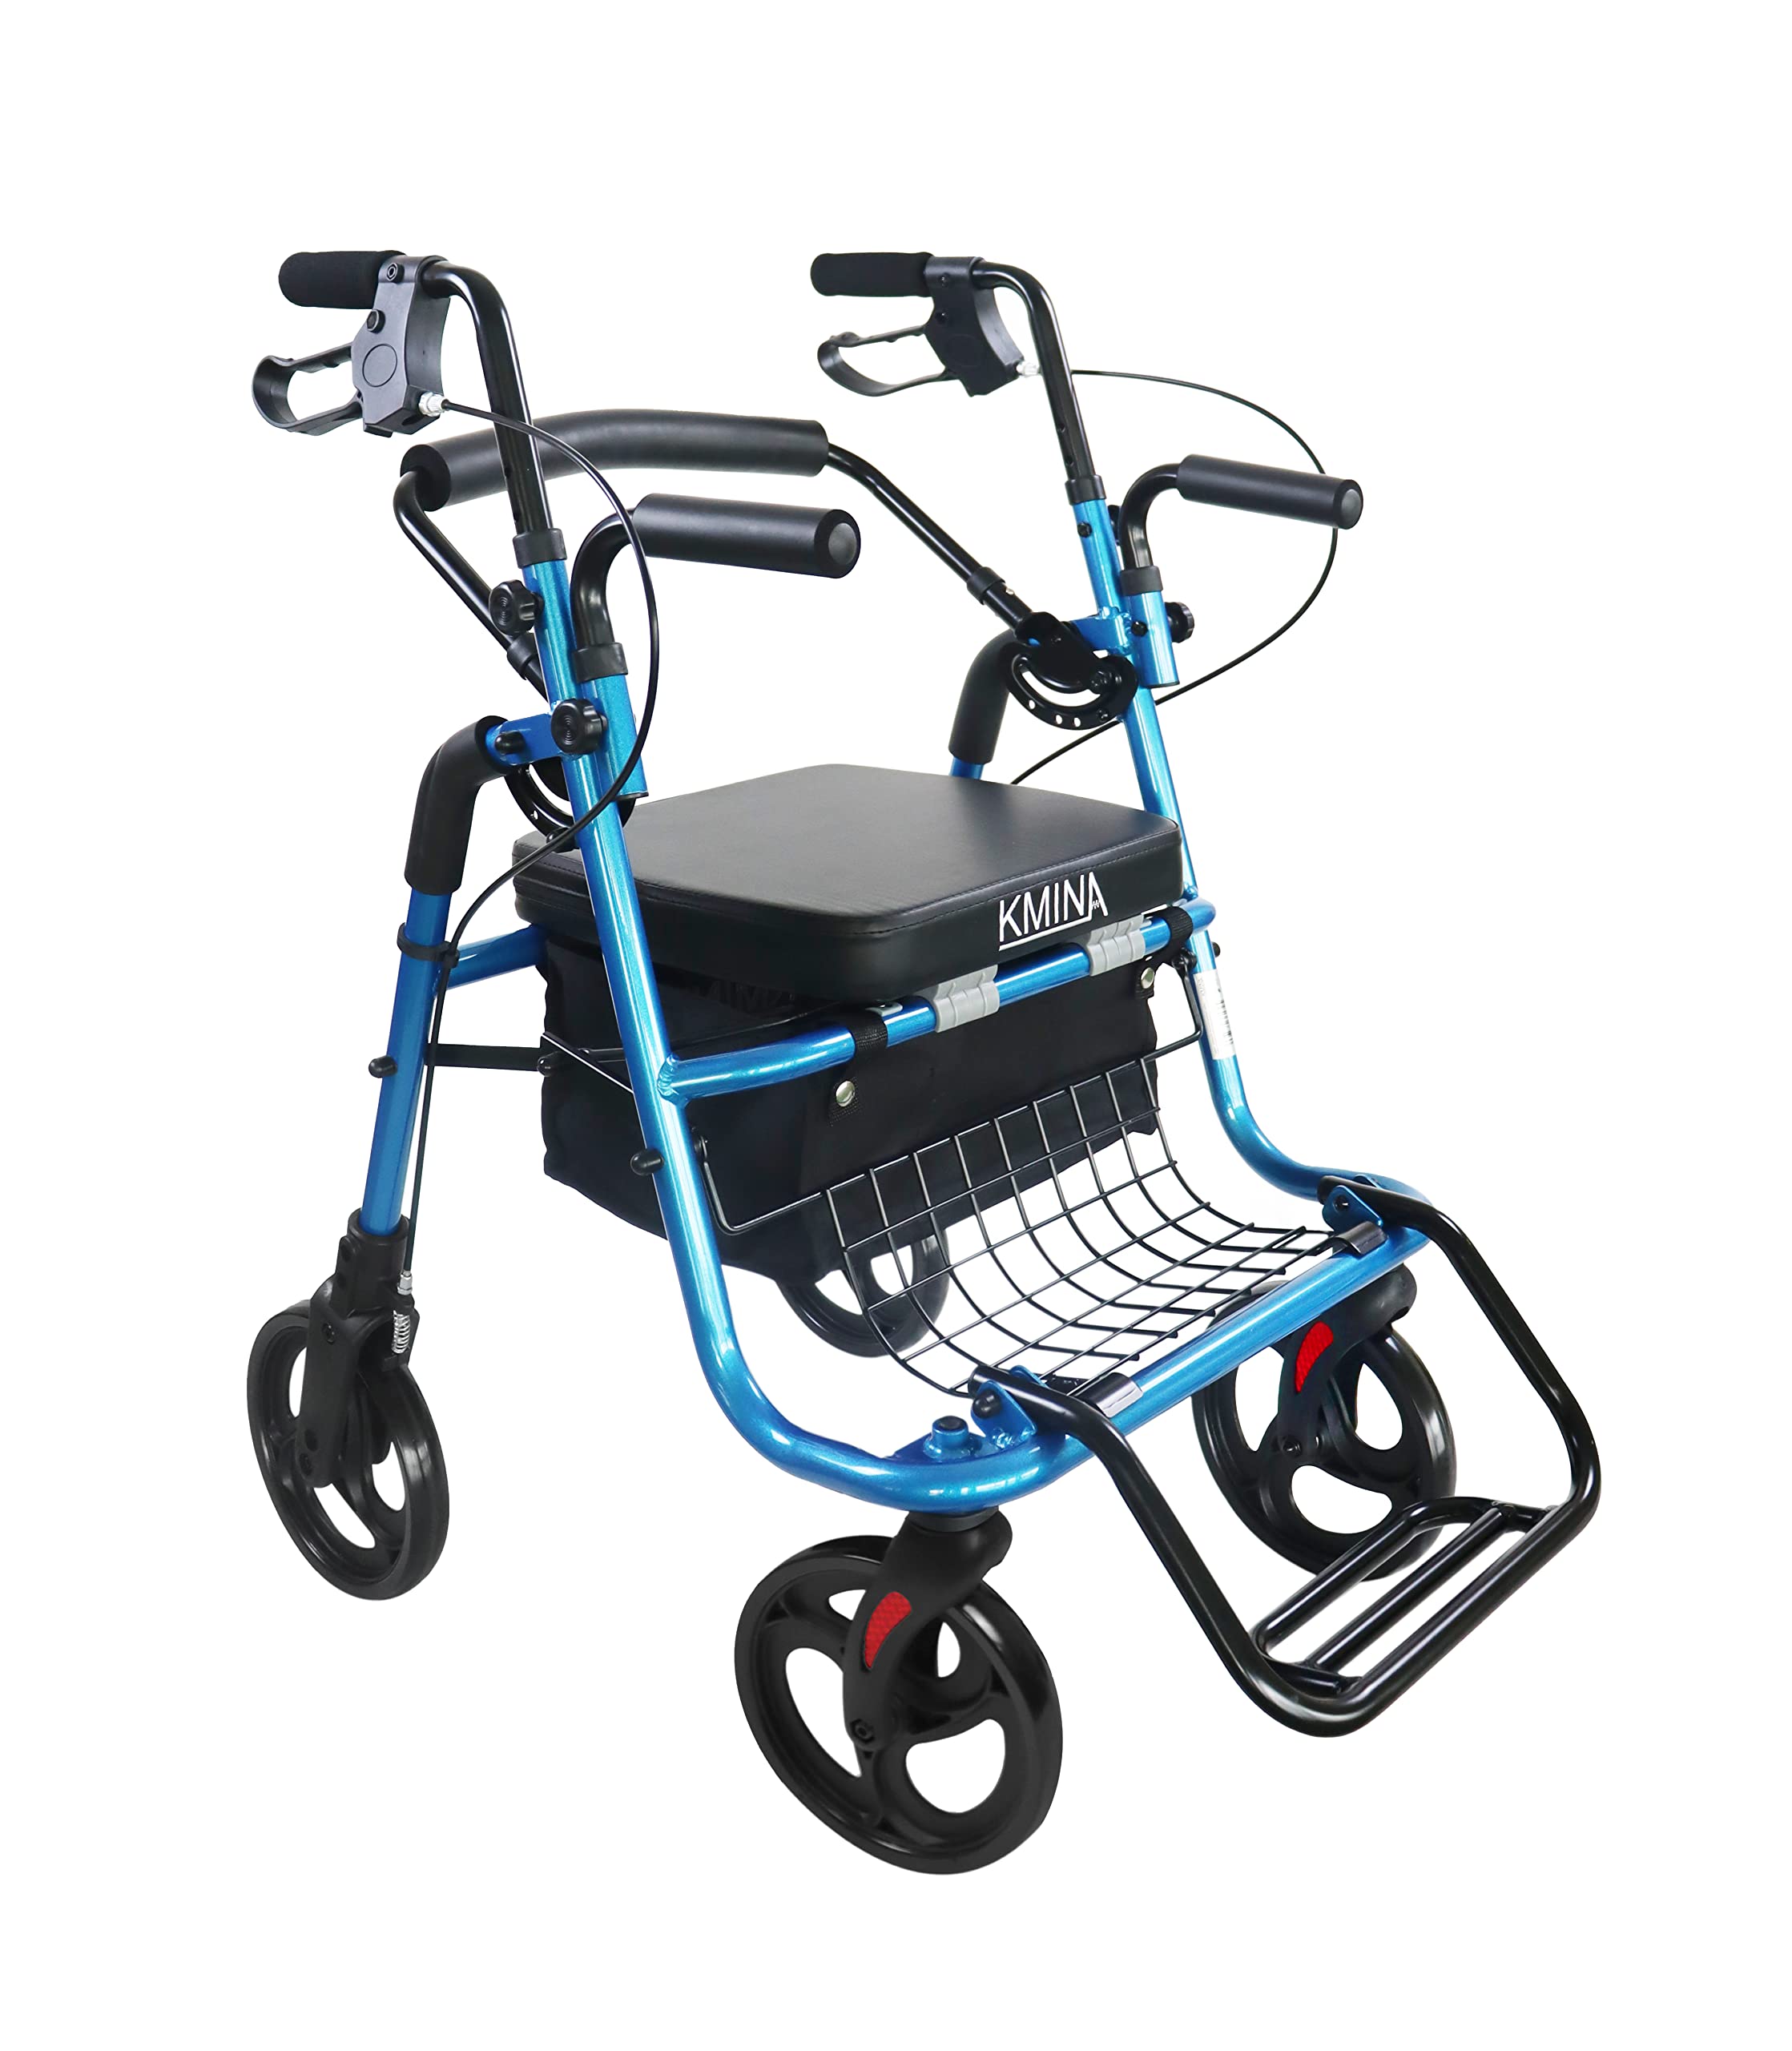 KMINA - 歩行器 高齢者用 室内、室内室外兼用 介護用 多機能椅子、歩行器 高齢者用 屋外、歩行車 高齢者用、四輪歩行車、高齢者用 四輪歩行器、高齢者 歩行車、四輪歩行器、高さ調節可、折り畳み可、ブルー